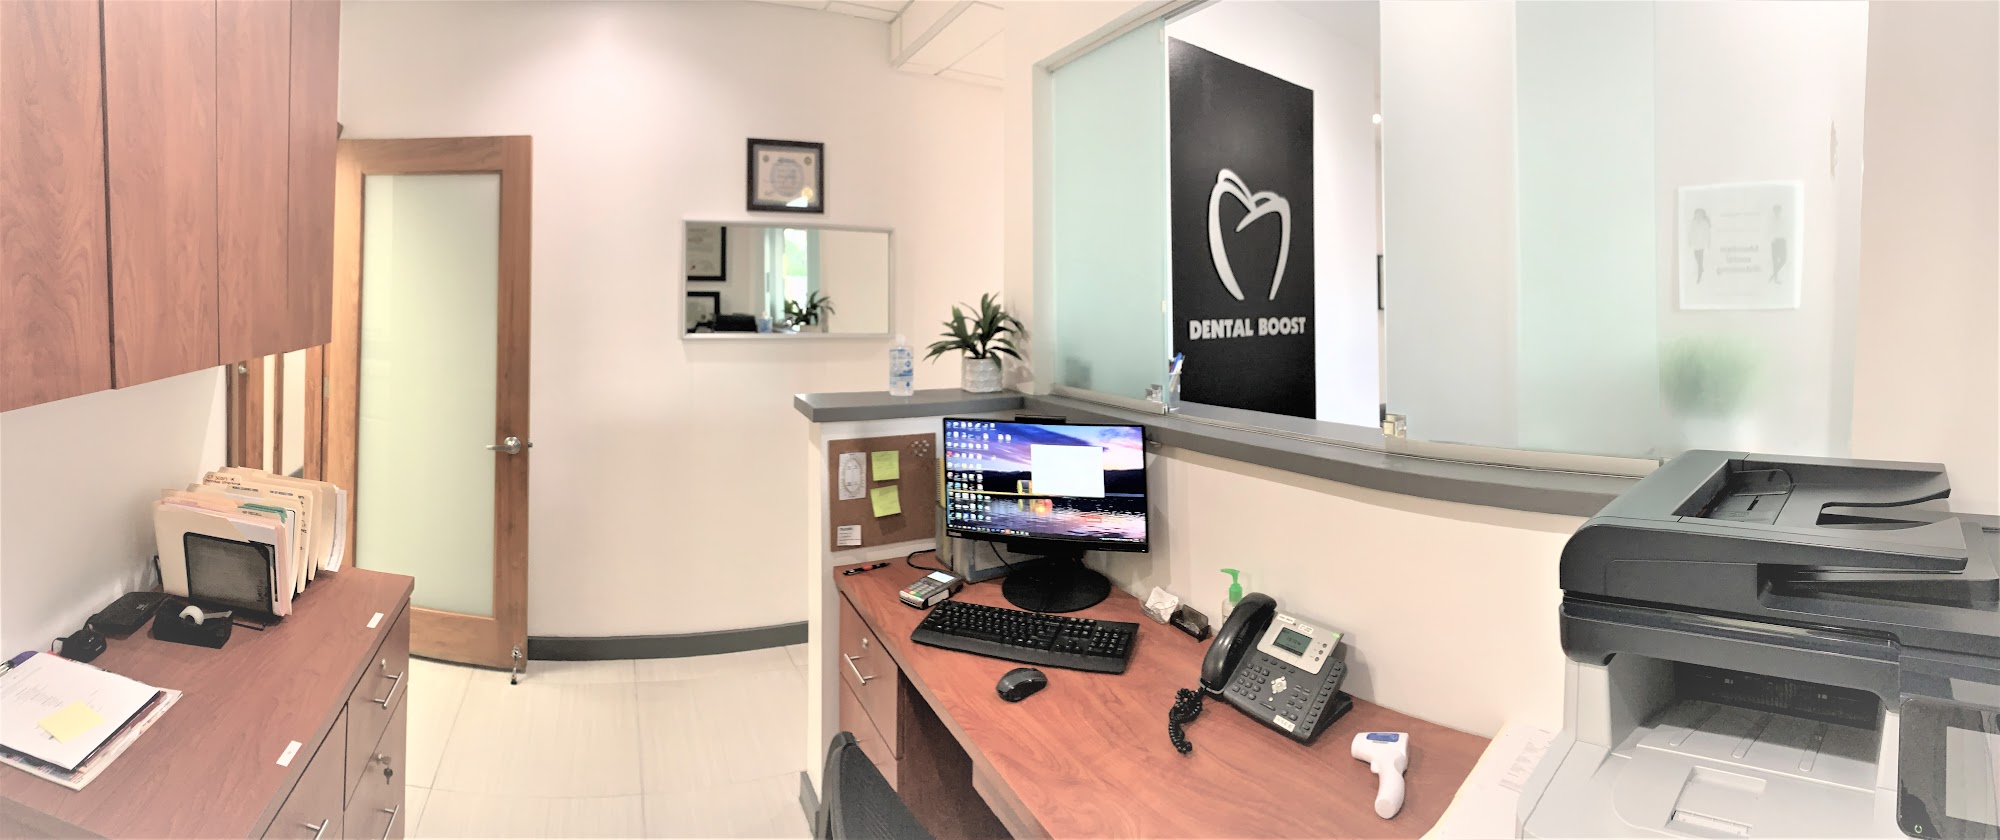 Dental Boost - Dentist in Hialeah, FL